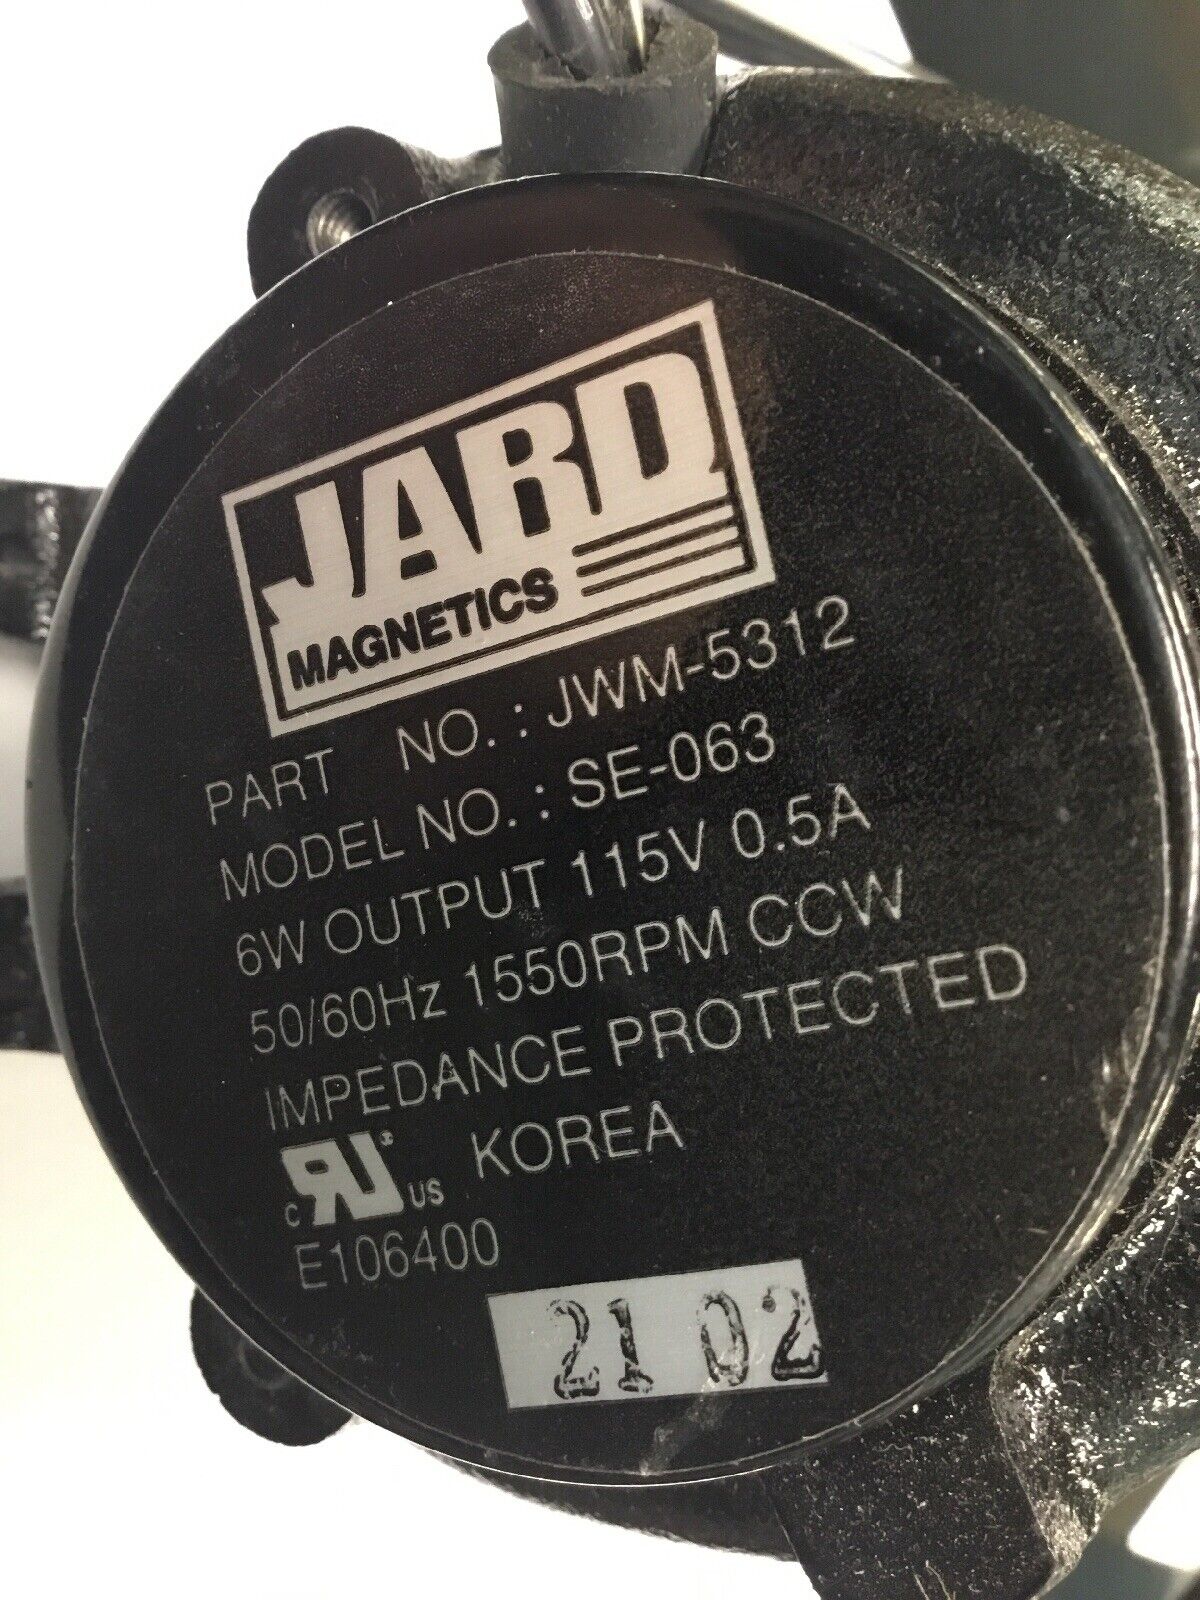 JARD Magnetics JWM-5312 Unit Bearing Cast Iron Motor 6W 115 V .05A CCW Impedance